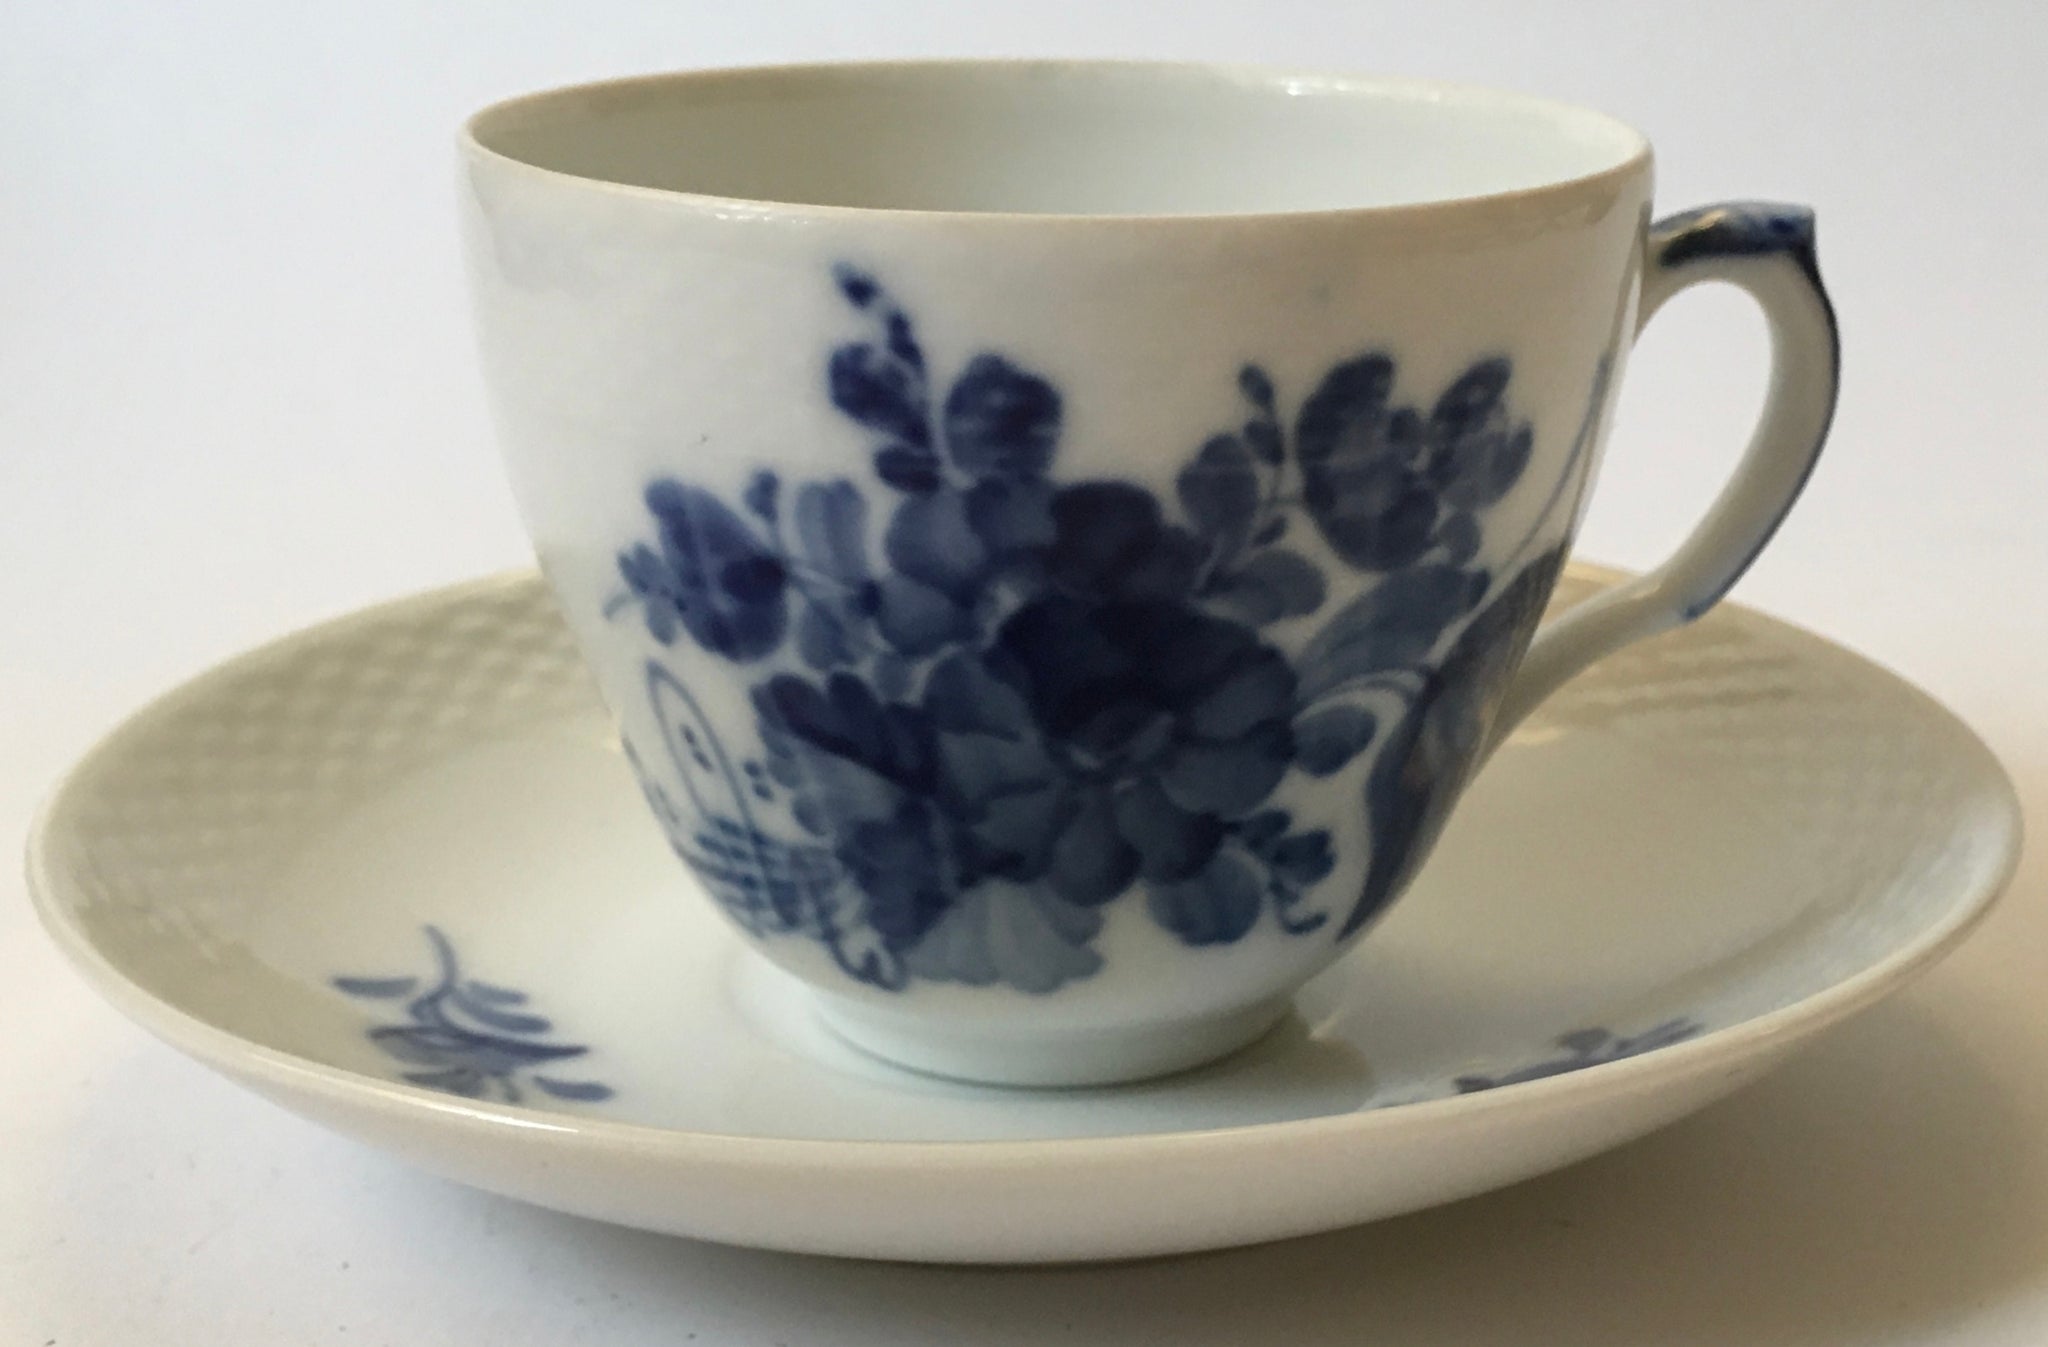 Three Royal Copenhagen Blue Flower Braided Coffee Cups with